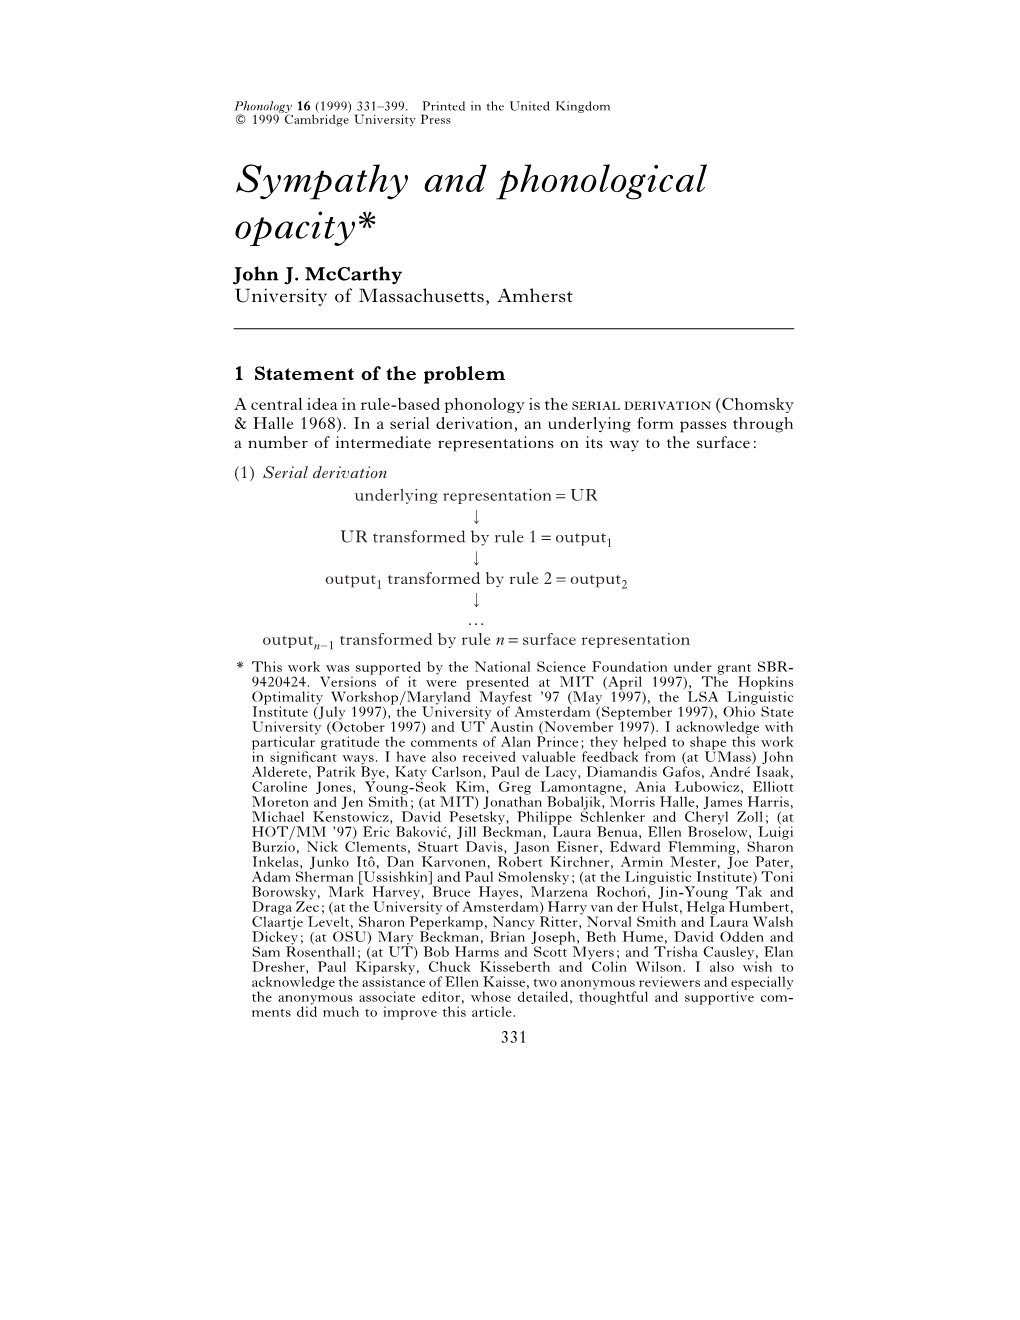 Sympathy and Phonological Opacity* John J